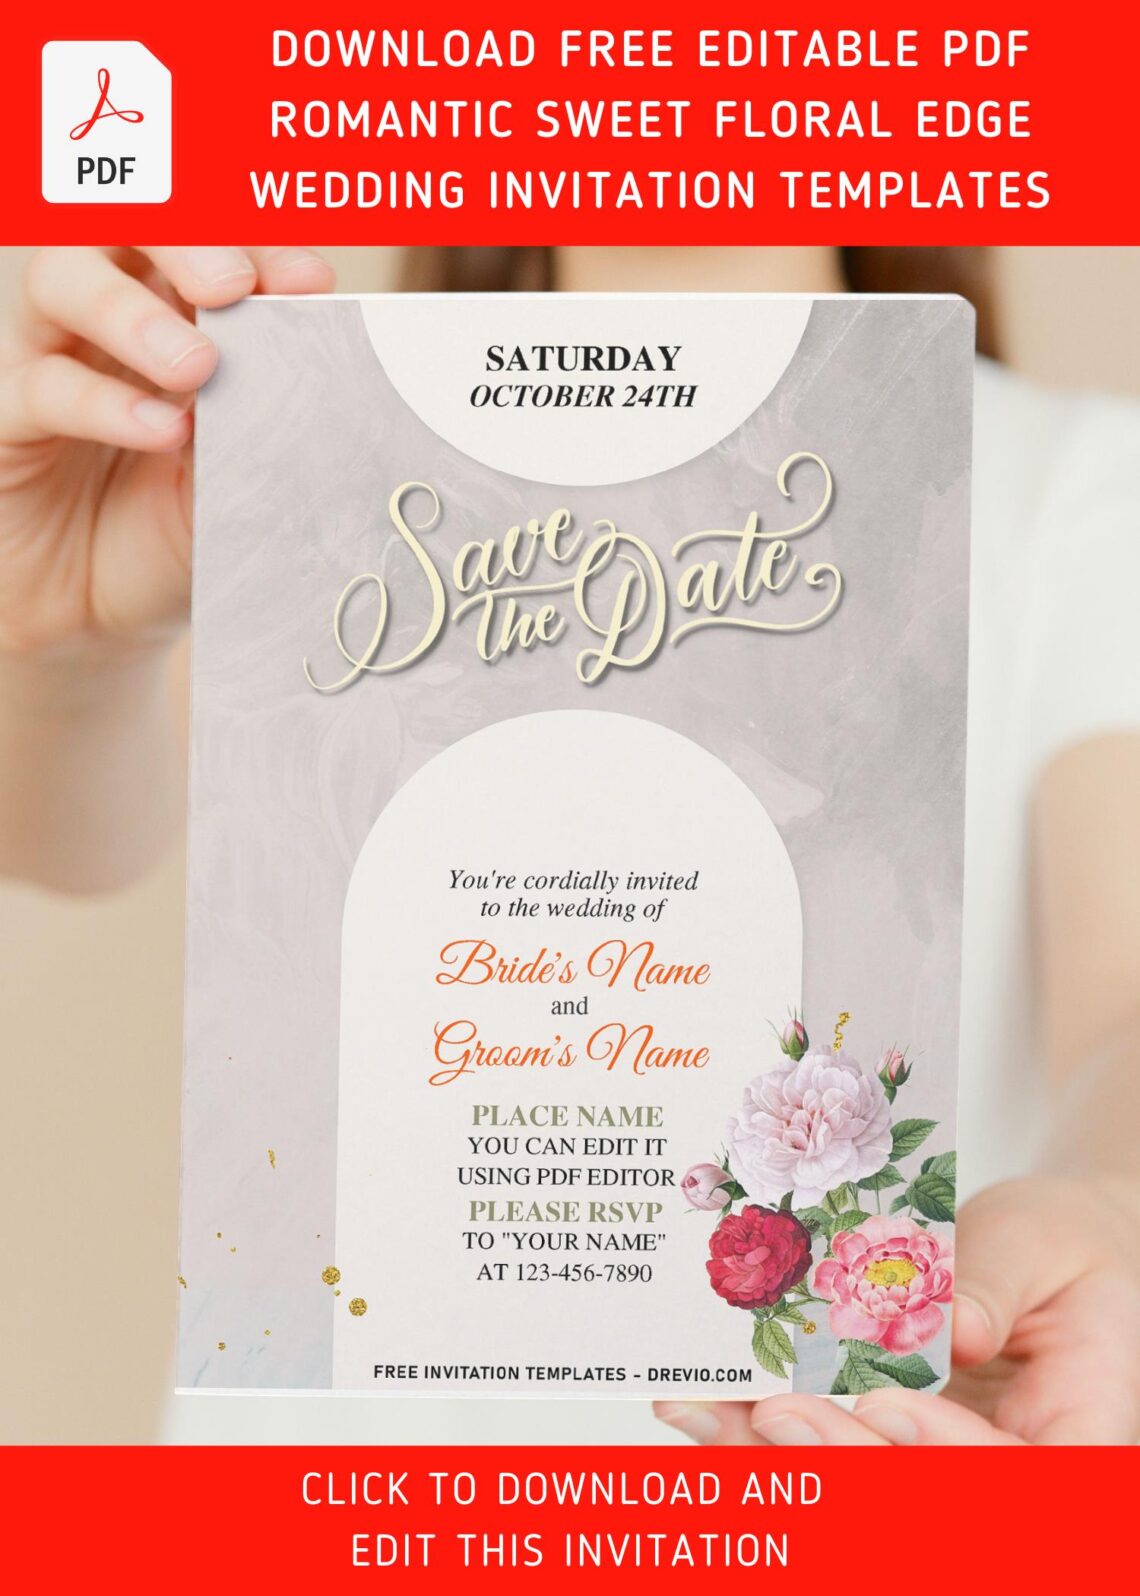 (Free Editable PDF) Romantic Sweet Blush Floral Edge Wedding Invitation Templates with editable text